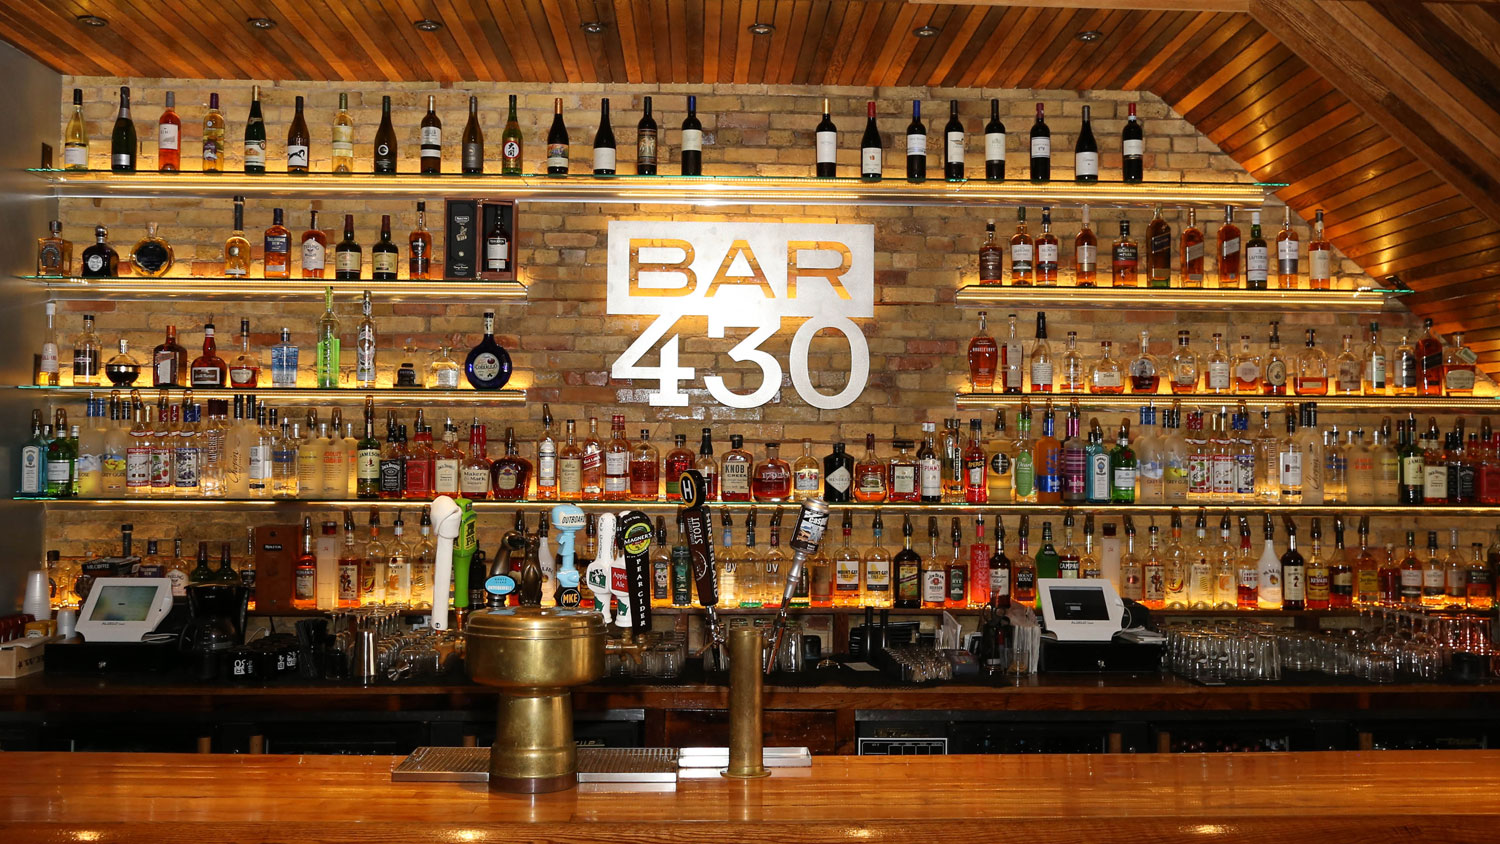 Bar 430 Design Build Bar